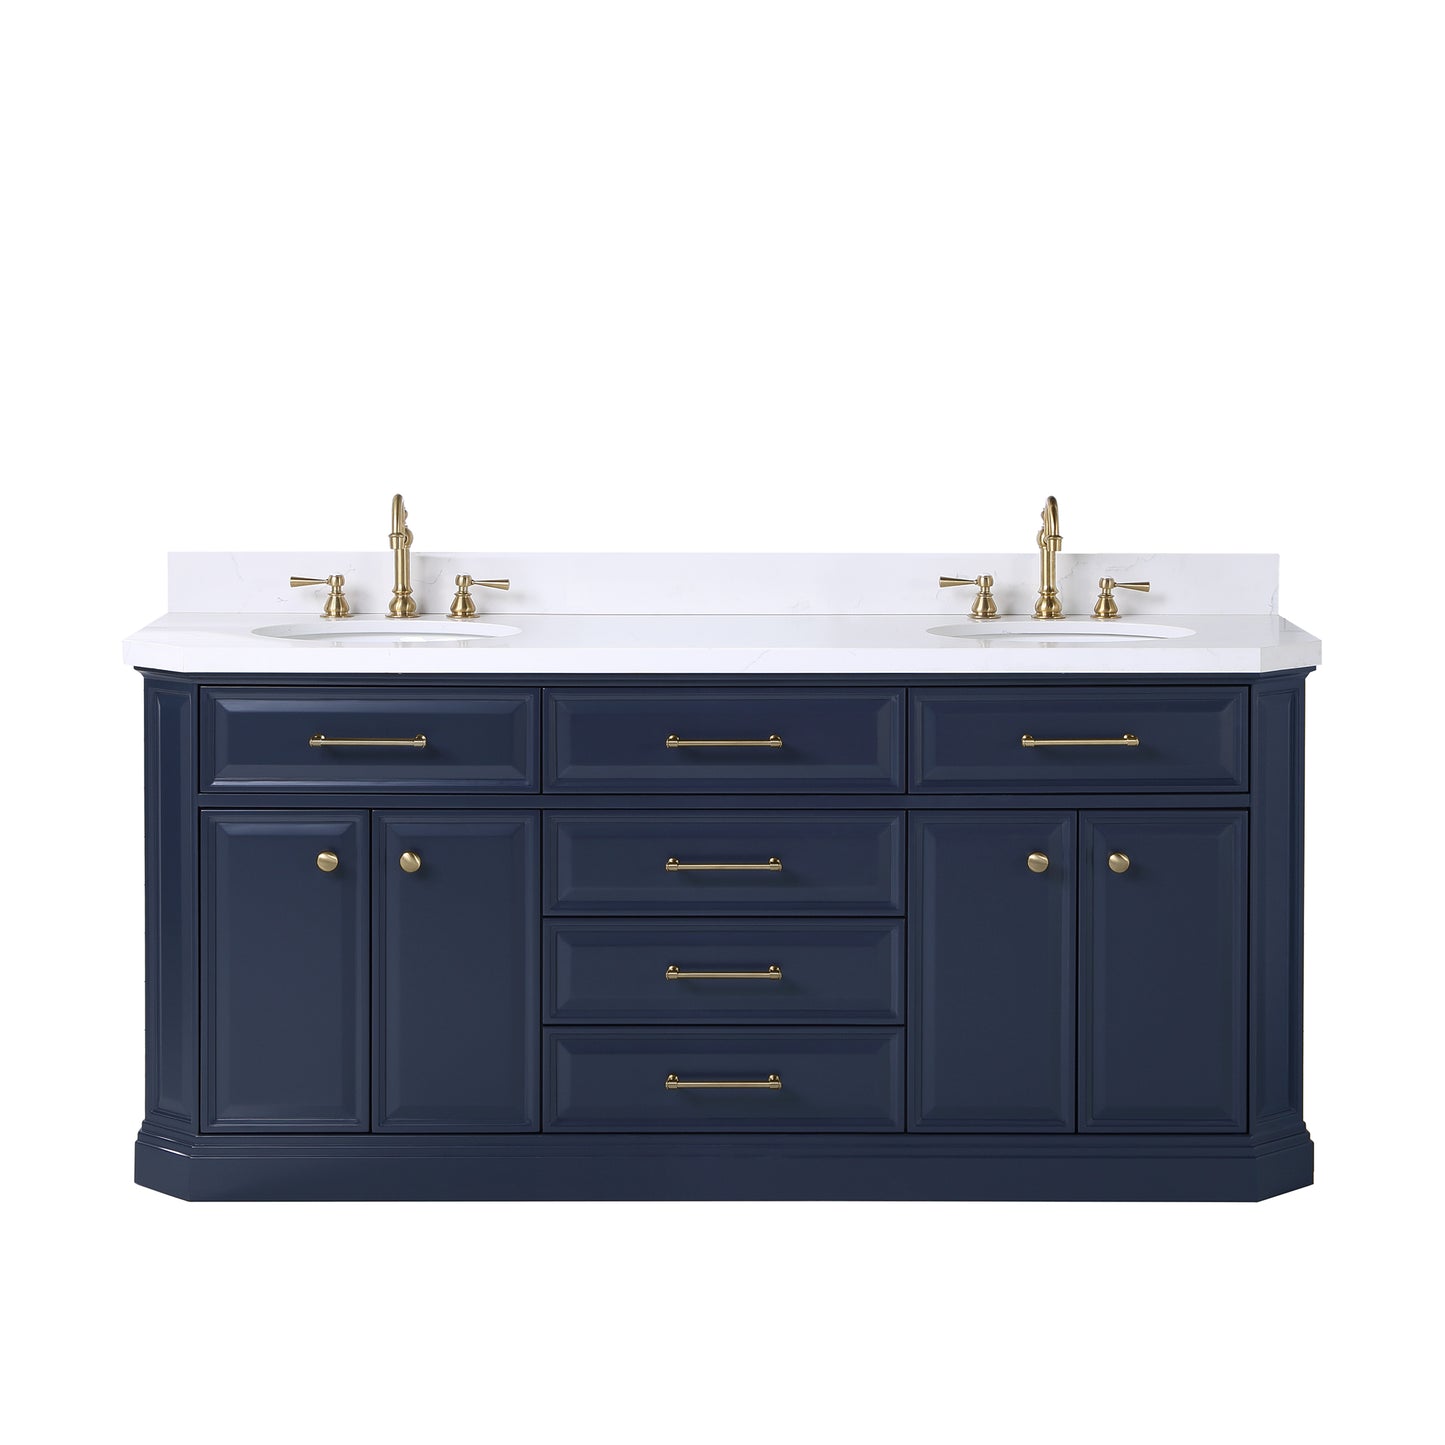 Water Creation Palace 72" Inch Double Sink White Quartz Countertop Vanity in Monarch Blue - Luxe Bathroom Vanities